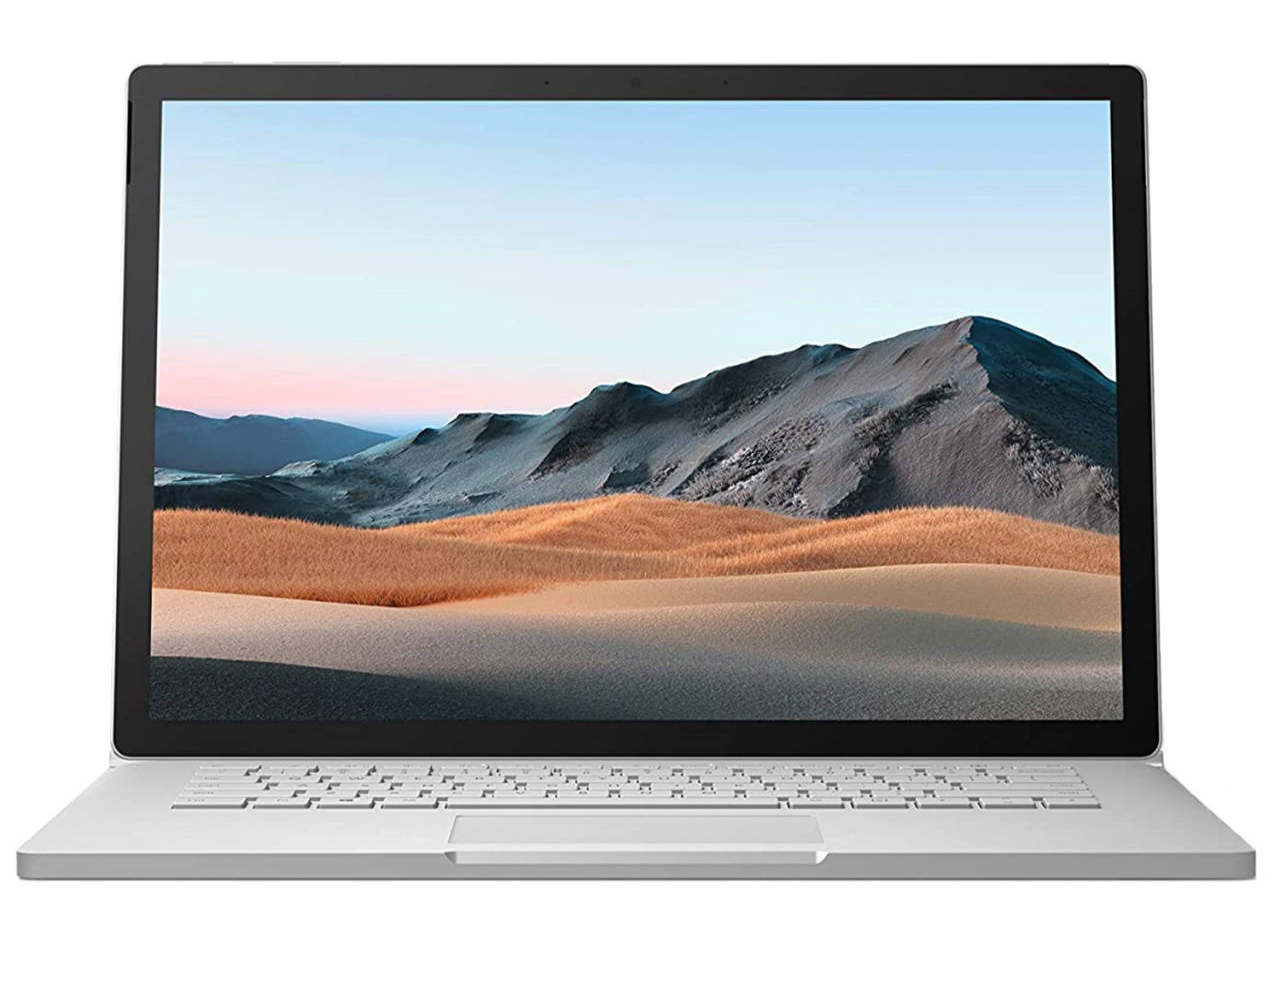 لپ تاپ - Laptop   مايكروسافت-Microsoft Surface Book 3 -Core i7 -16GB-256 SSD -6GB -15 INCH